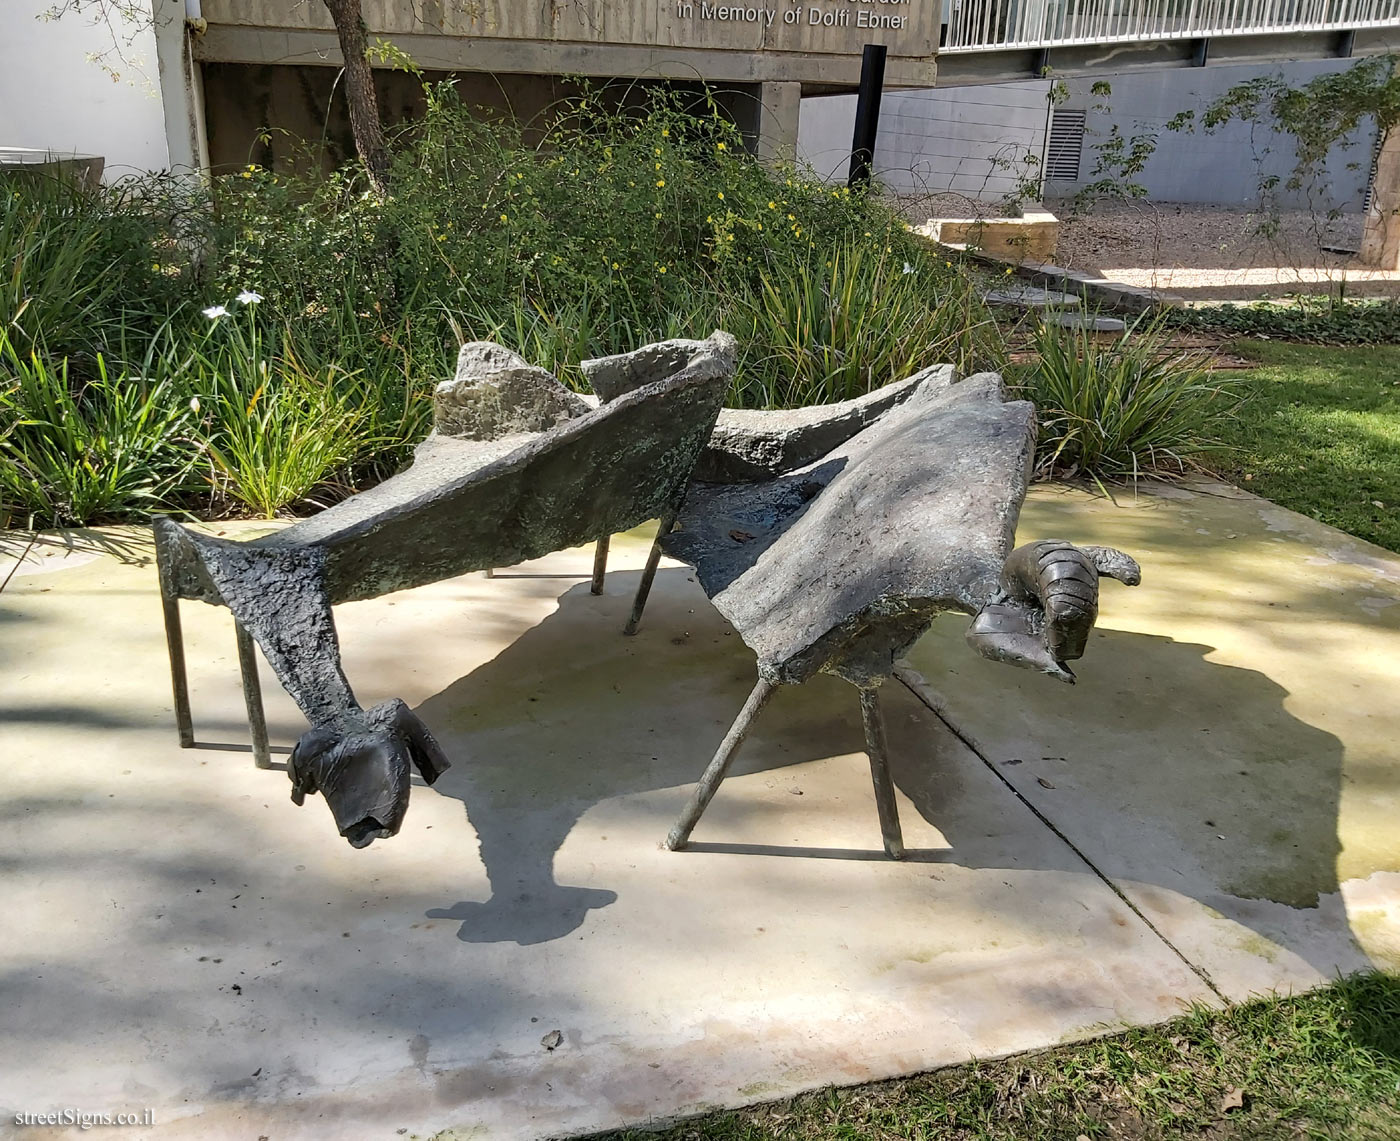 Tel Aviv - Lola Beer Ebner Sculpture Garden - "Sheep of the Negev" - Itzhak Danziger - Tel Aviv Museum